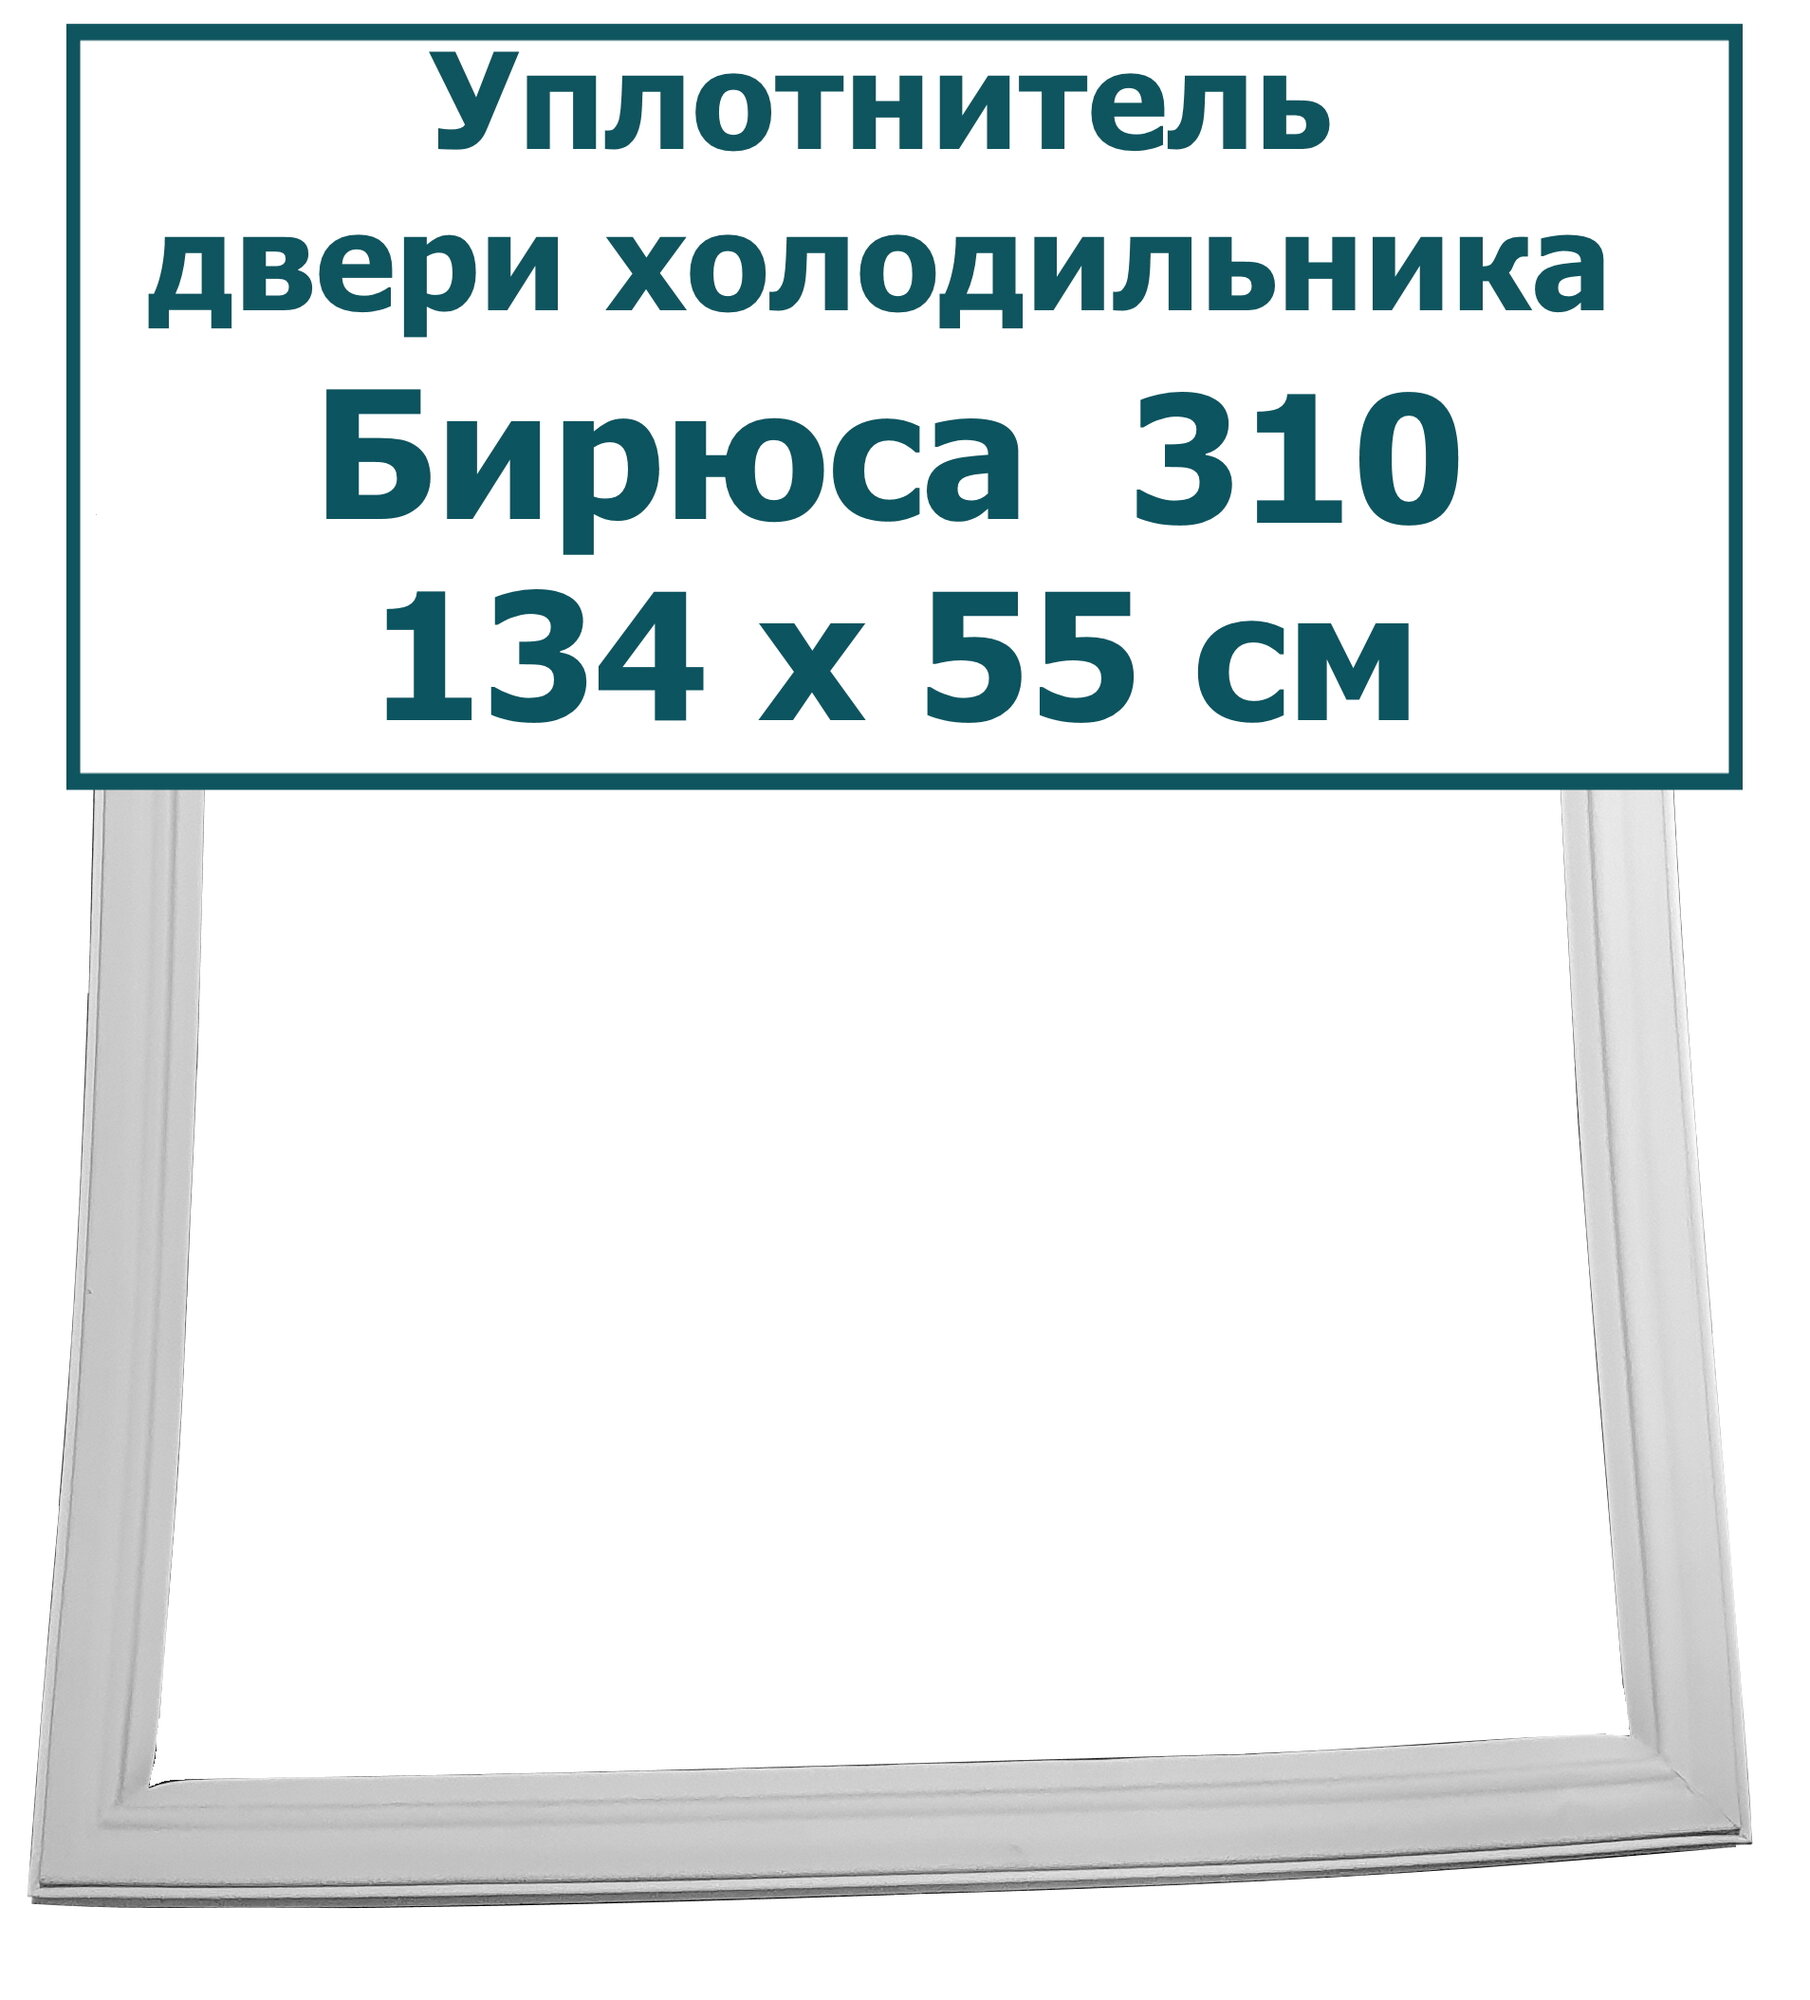 Уплотнитель (резинка) двери холодильника Бирюса 310 E, (134 x 55 см (1340 x 550 мм)) (тип крепления - "шип-паз")